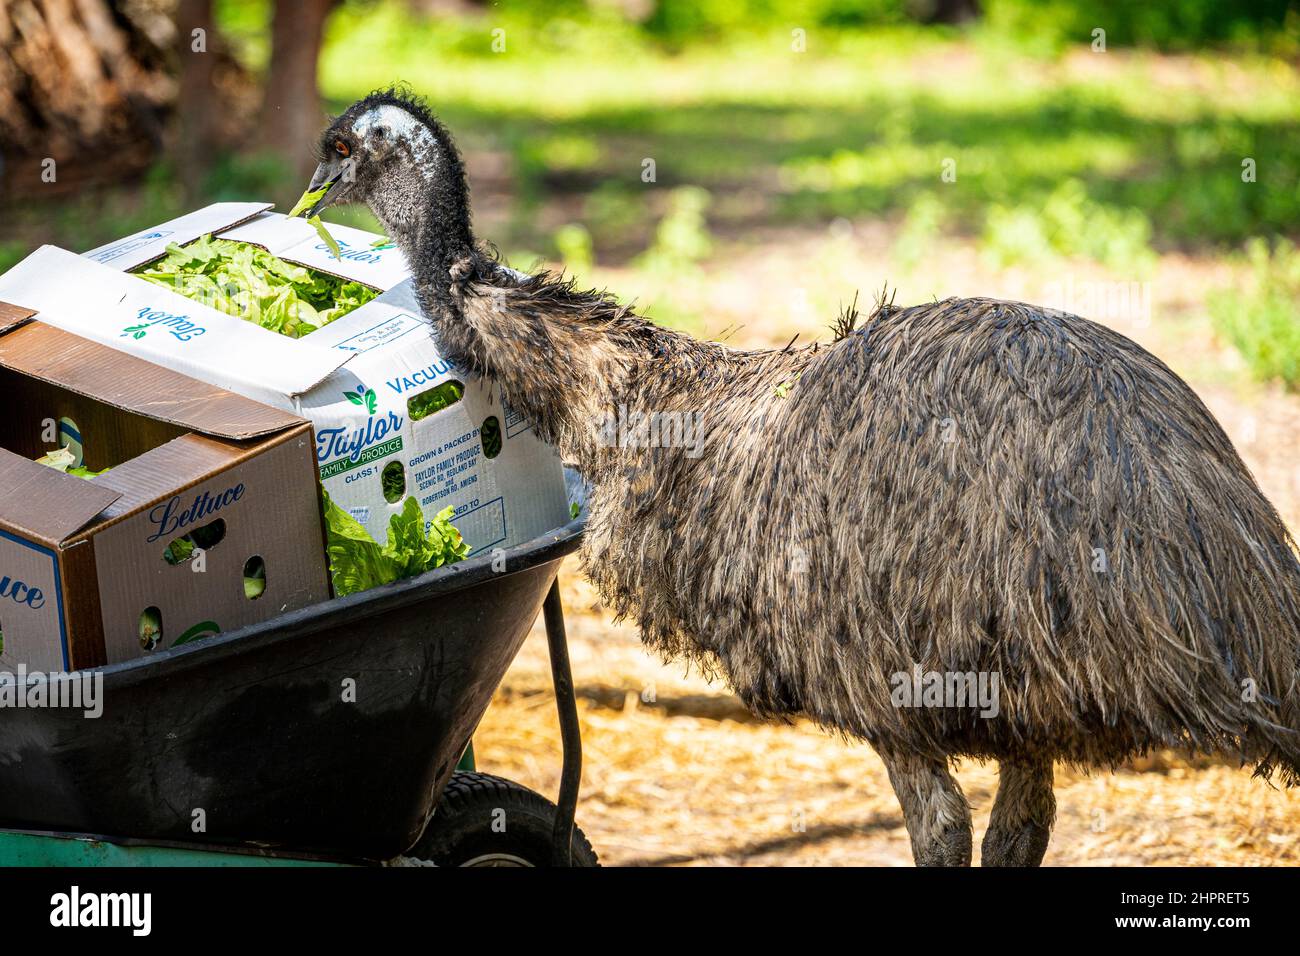 Emu (Dromaius novaehollandiae), der Salat aus einer Pappschachtel am Naturschutzgebiet isst. Queensland, Australien Stockfoto